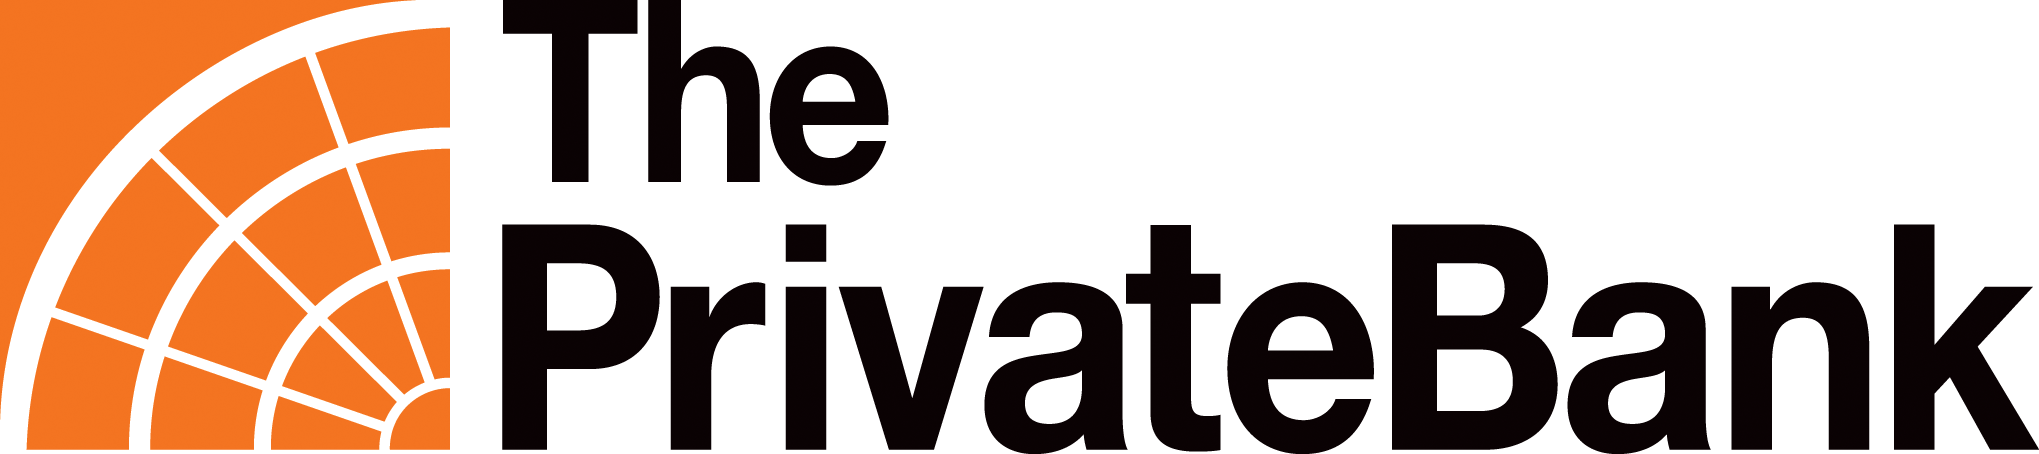 Privatebancorp Brand Logo